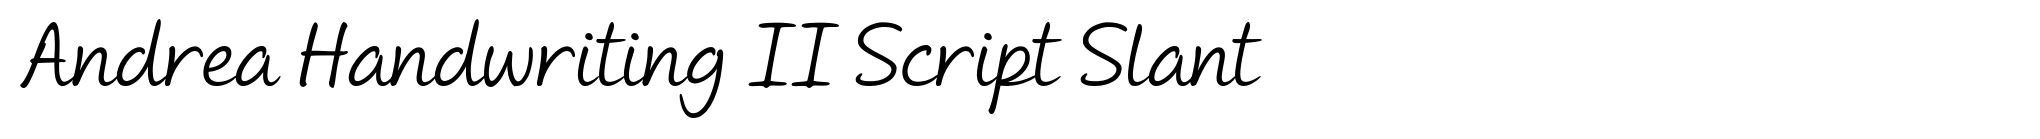 Andrea Handwriting II Script Slant image